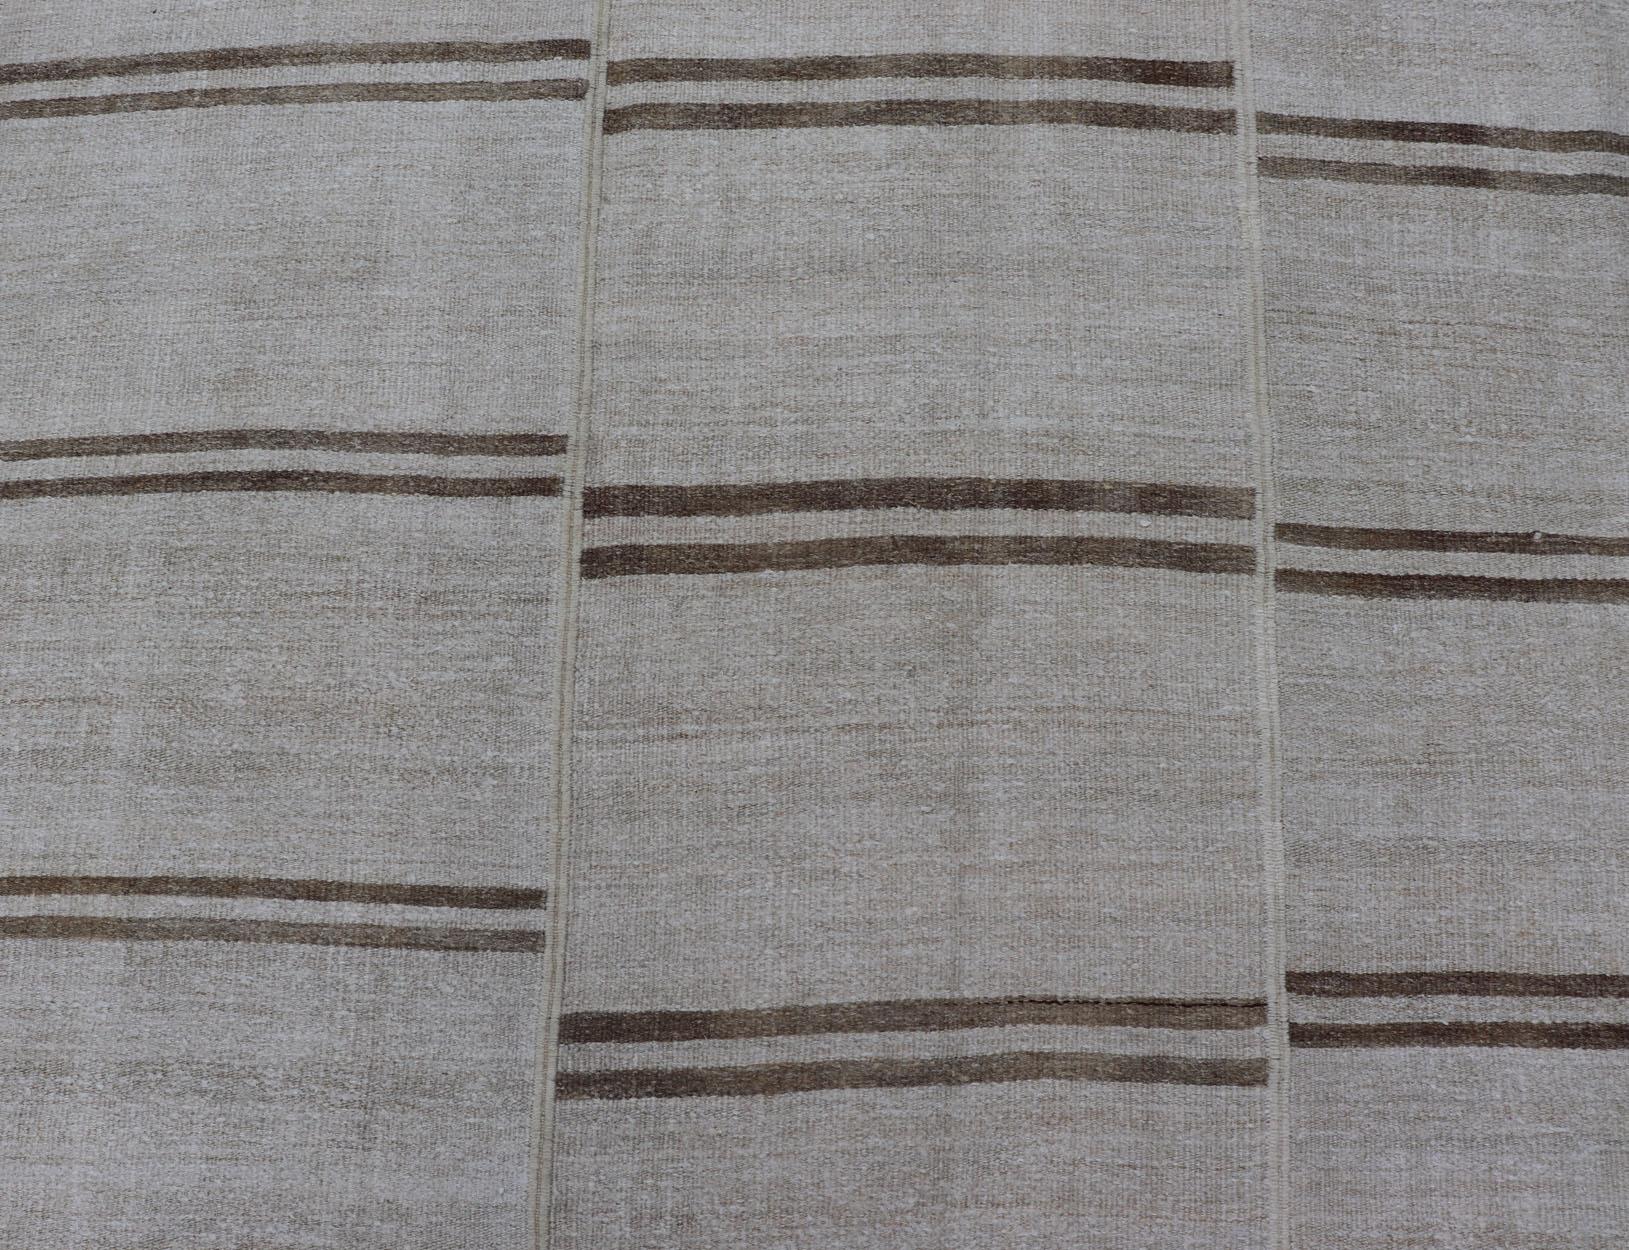 Large Vintage Paneled Kilim Flat-Weave Stripe in Neutral Tones of Cream & light Brown. Keivan Woven Arts /rug#EN-179572, country of origin / type: Turkey / Kilim 1950's, Casual flat-weave Kilim 

Measures: 12'2 x 14'8 

This beautiful Large Vintage